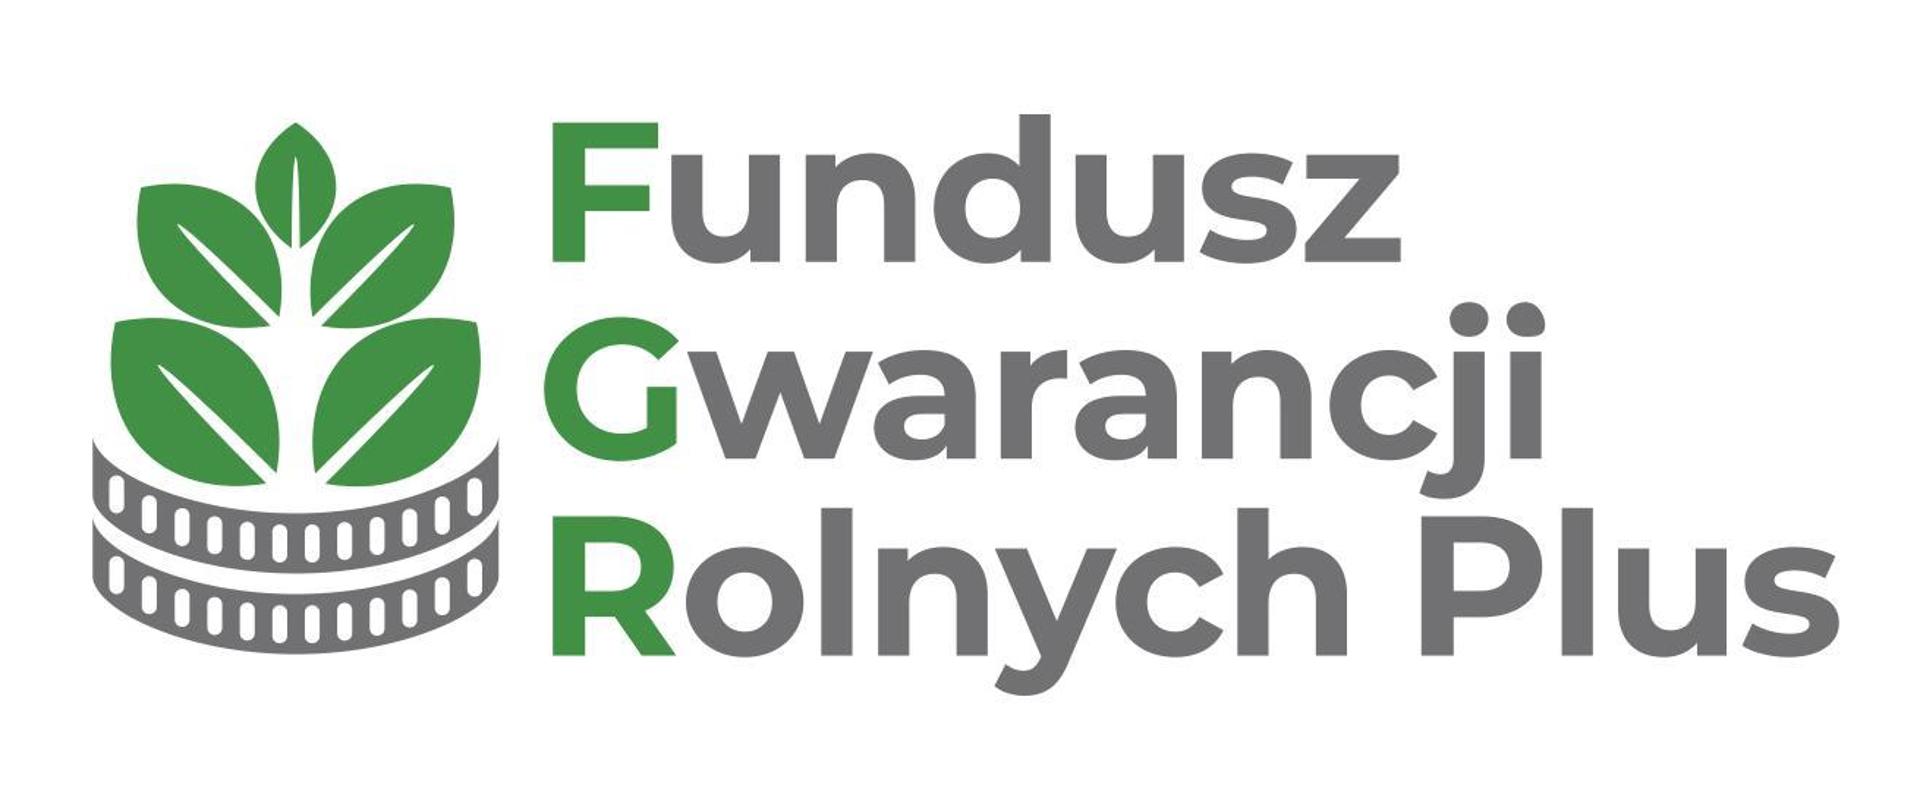 Fundusz Gwarancji Rolnych Plus